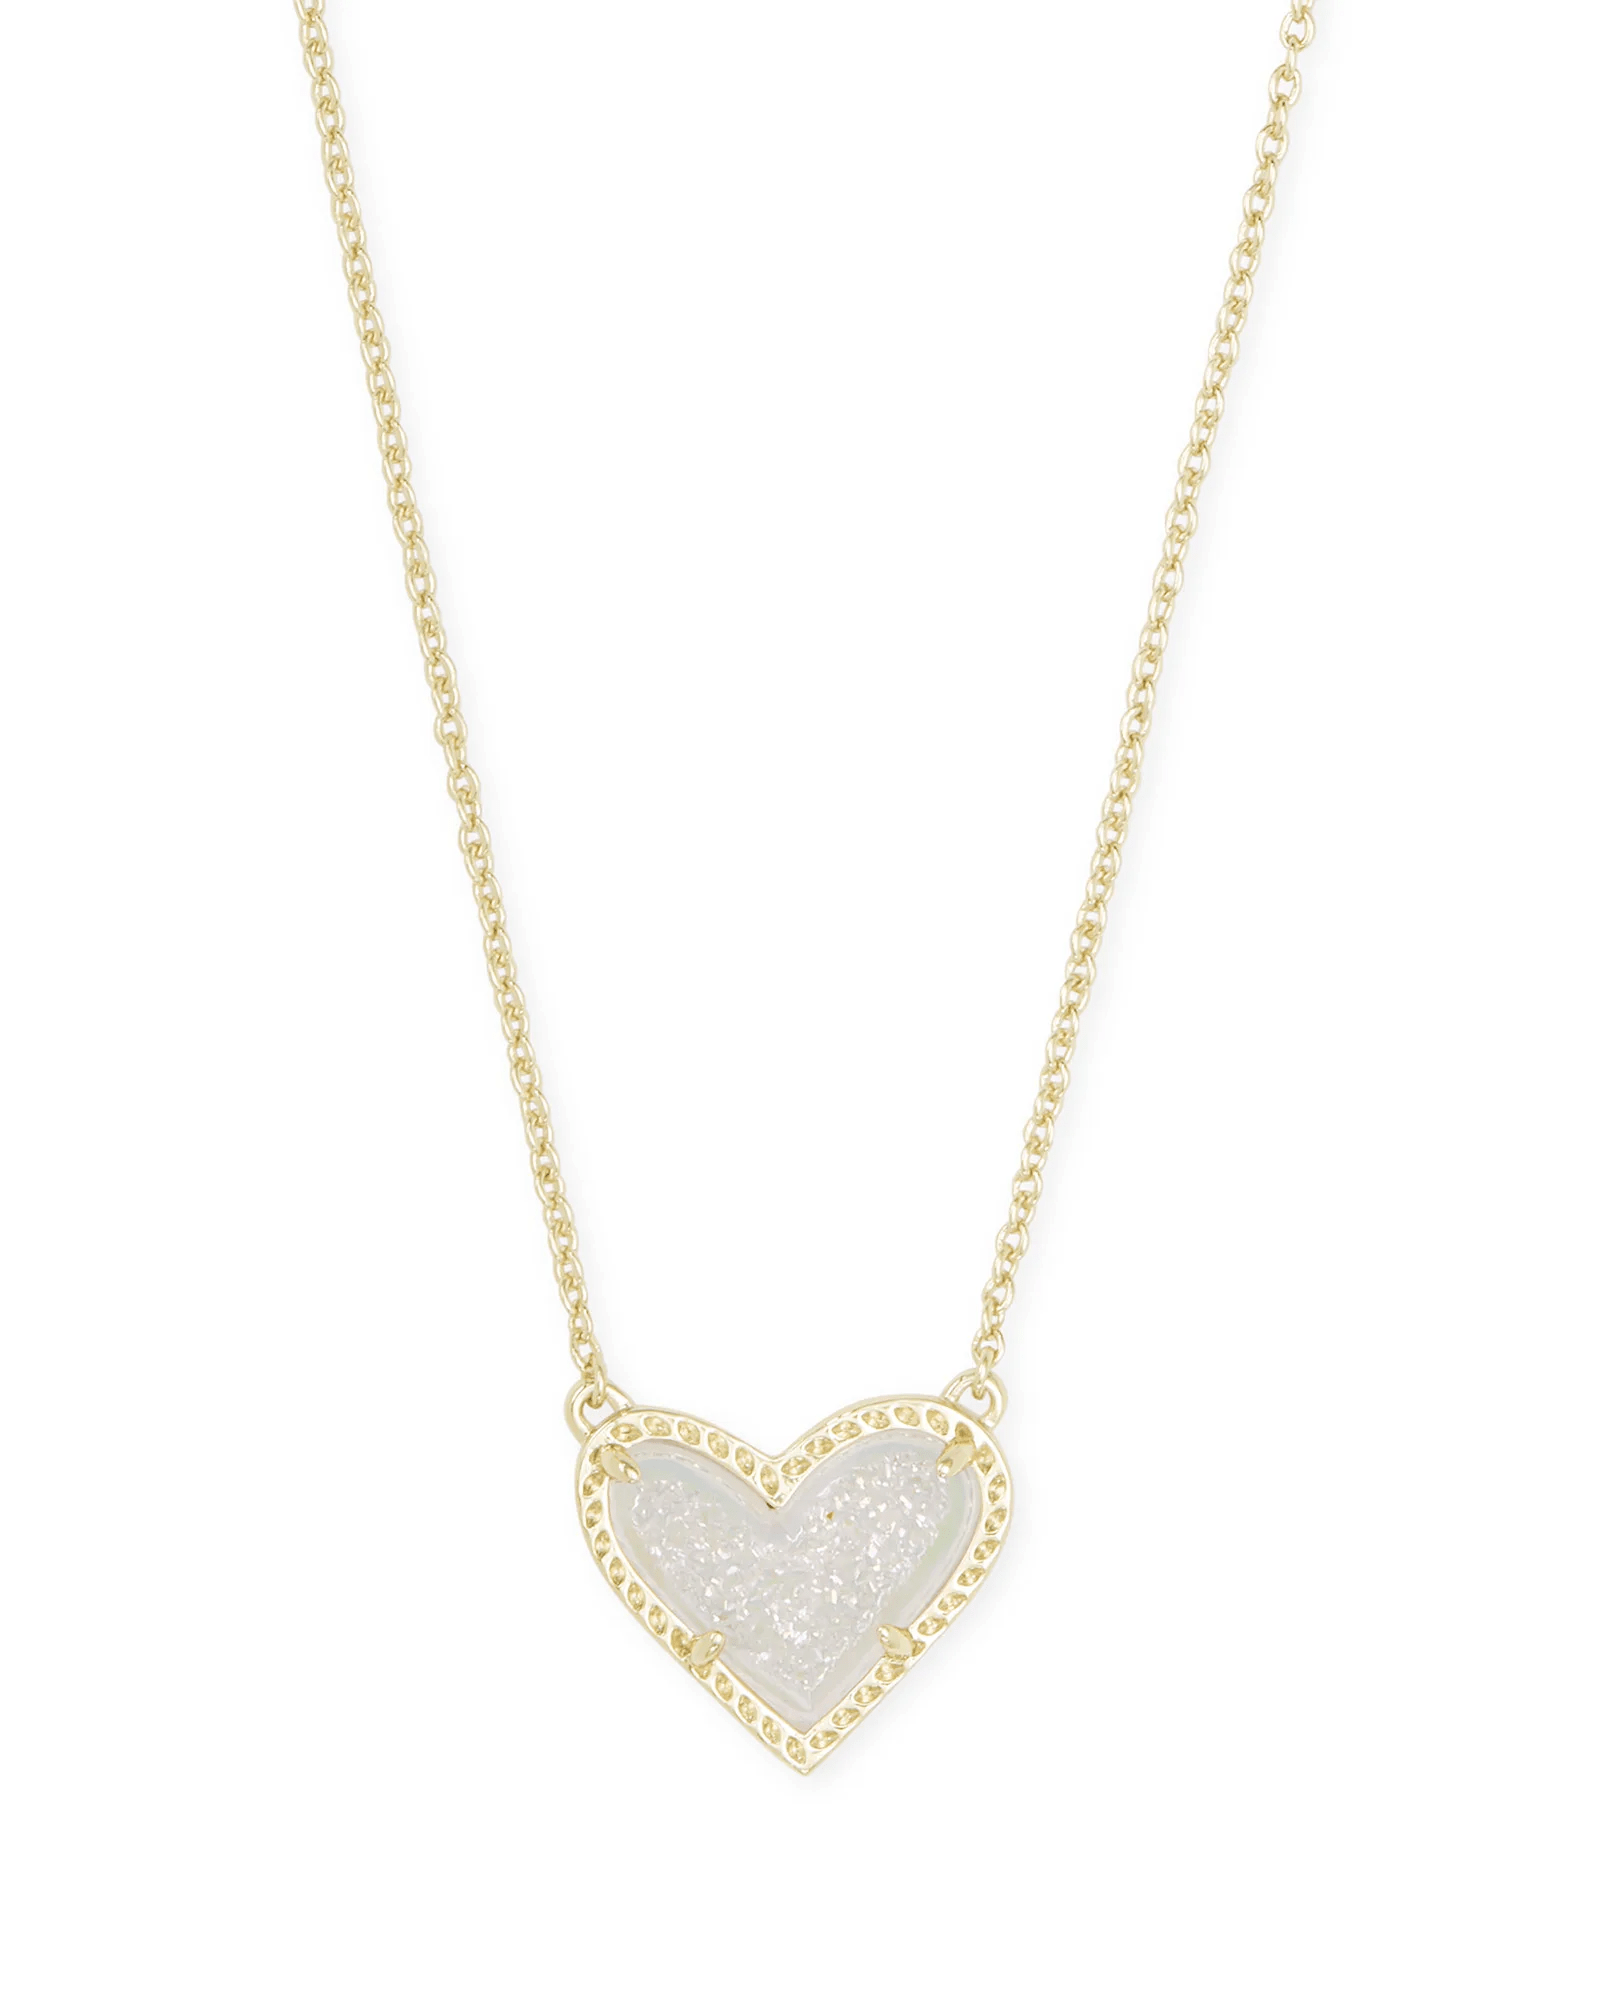 Kendra Scott Women - Accessories - Earrings Ari Heart Gold Pendant Necklace in Iridescent Drusy | Kendra Scott